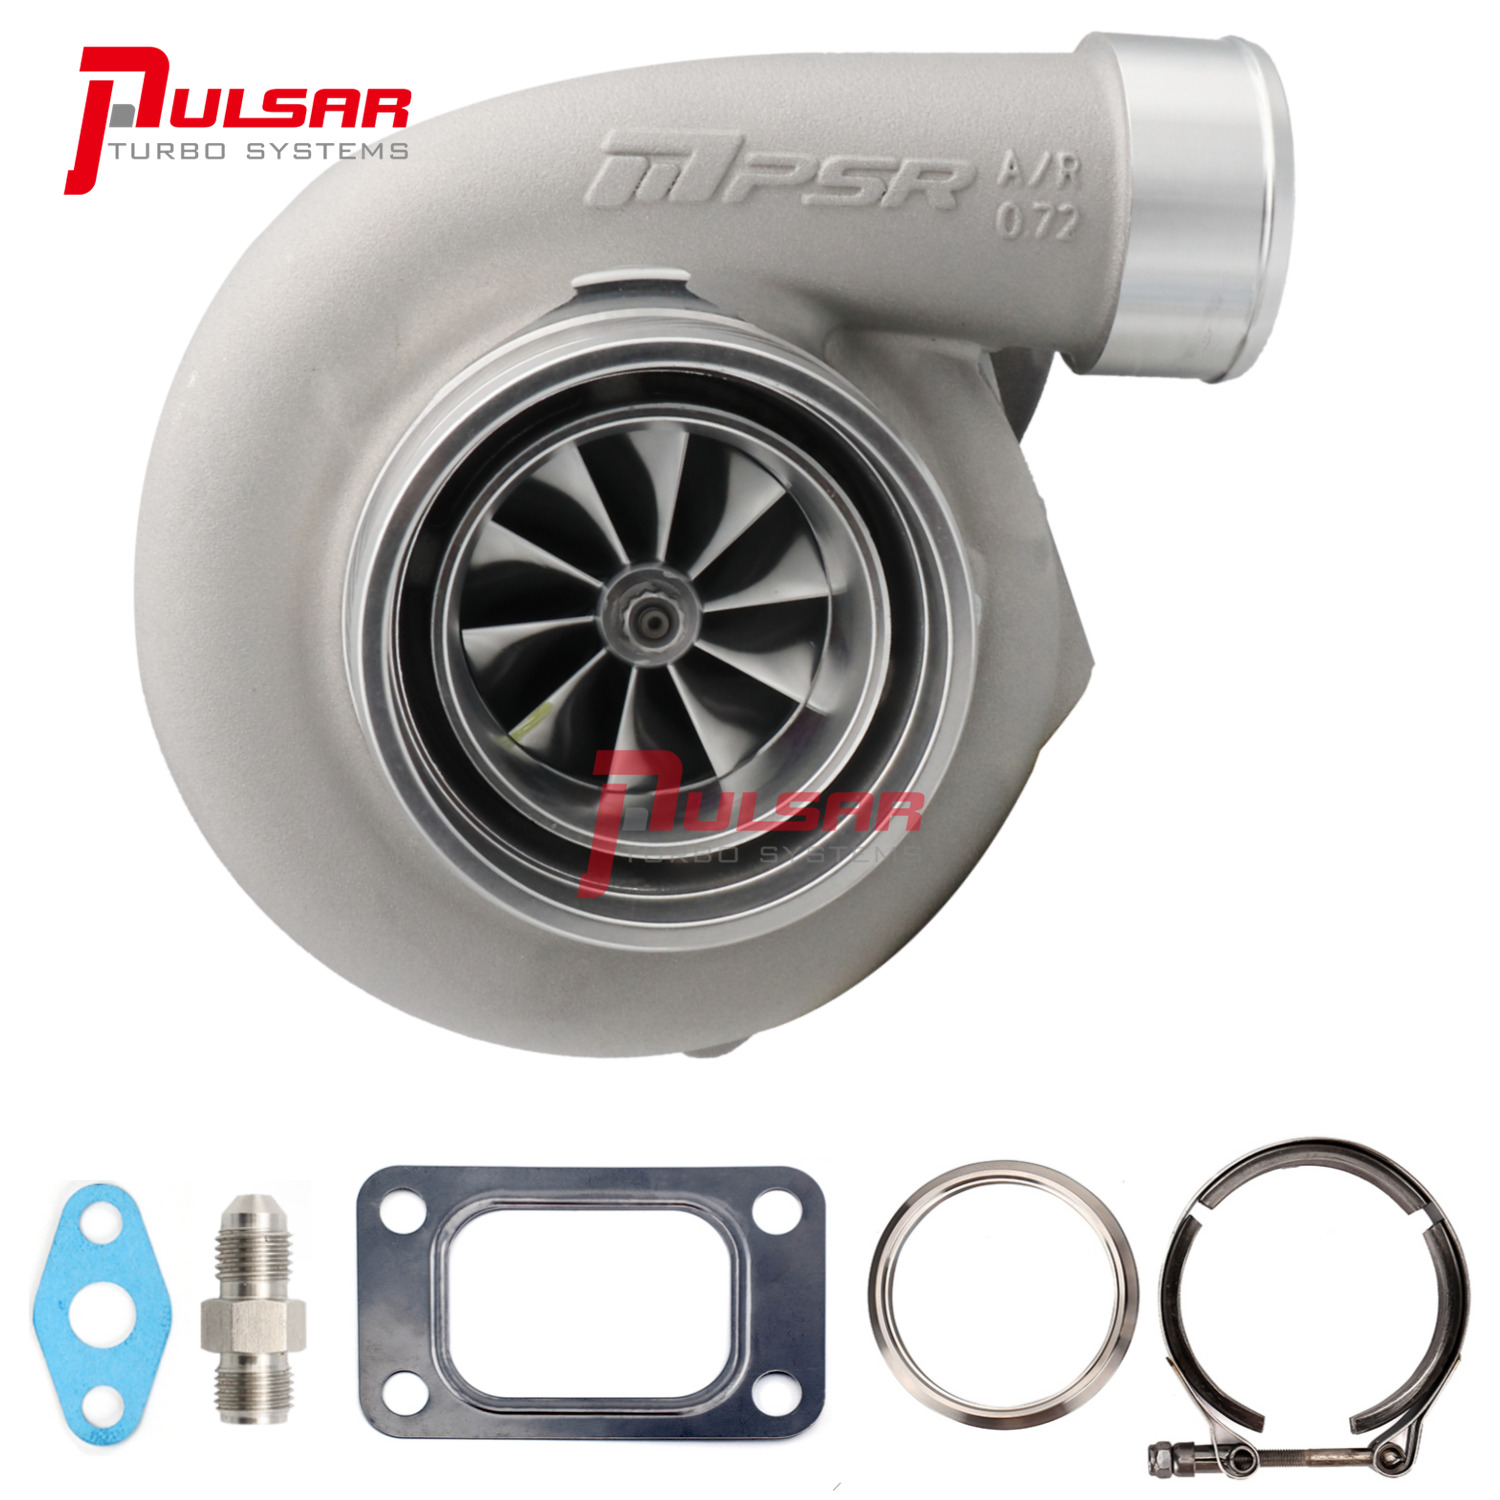 Pulsar Turbo PSR3582 GEN2 Dual Ball Bearing Turbo T3 Open Inlet, Vband 0.82 A/R